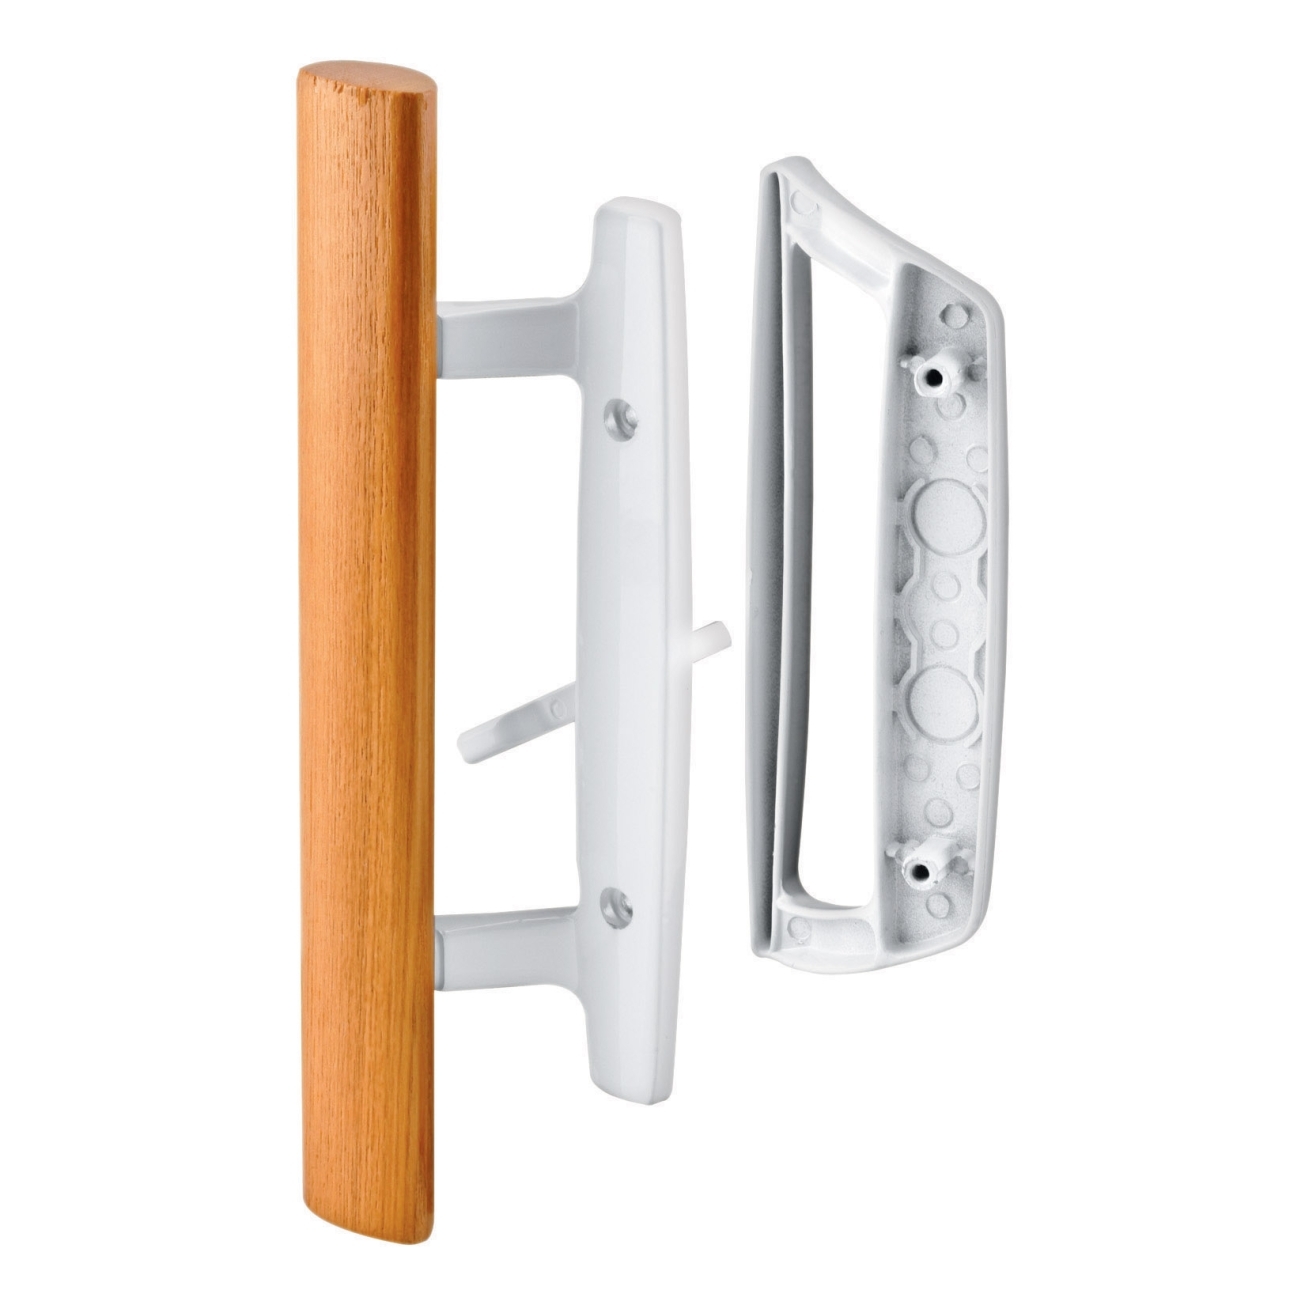 Prime Line Products C1176 White Sliding Glass Door Handleprime line 3 1516in patio door handle set in whitewood 143532